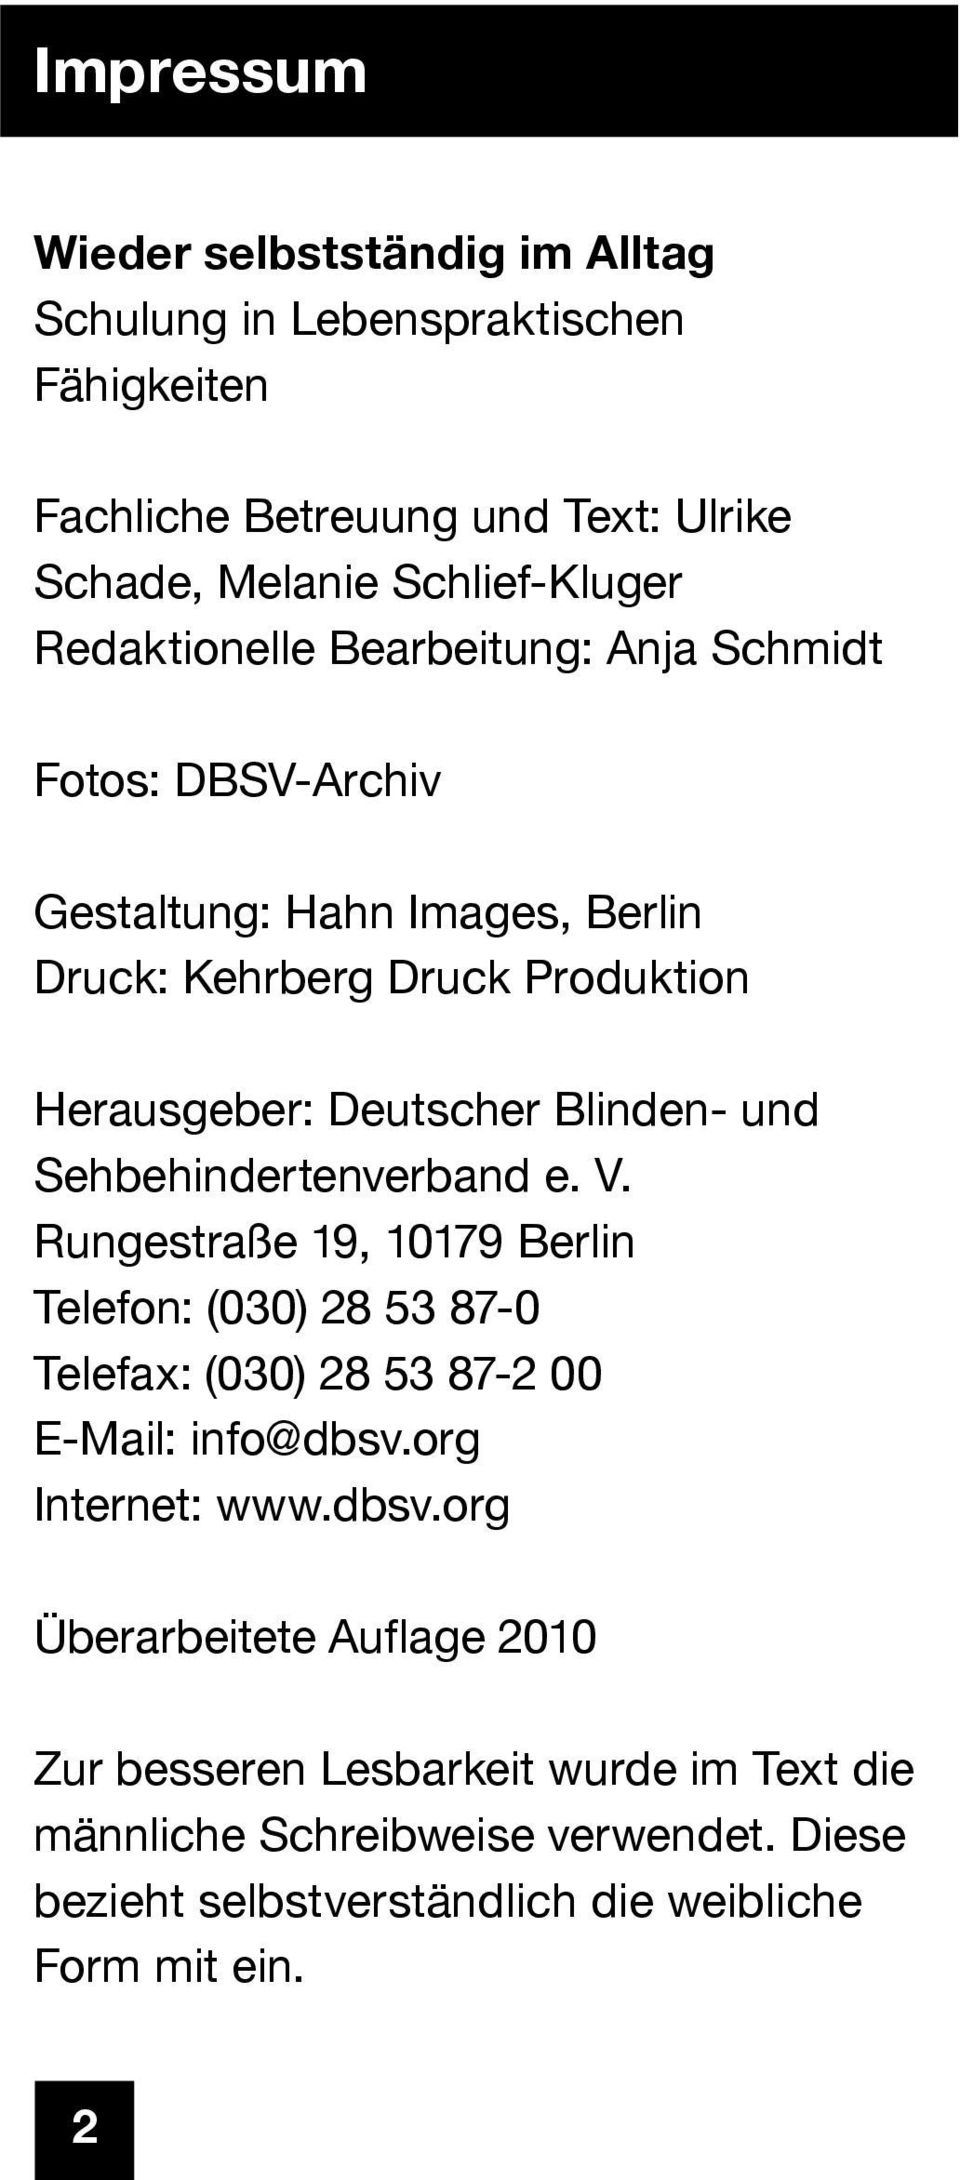 und Sehbehindertenverband e. V. Rungestraße 19, 10179 Berlin Telefon: (030) 28 53 87-0 Telefax: (030) 28 53 87-2 00 E-Mail: info@dbsv.